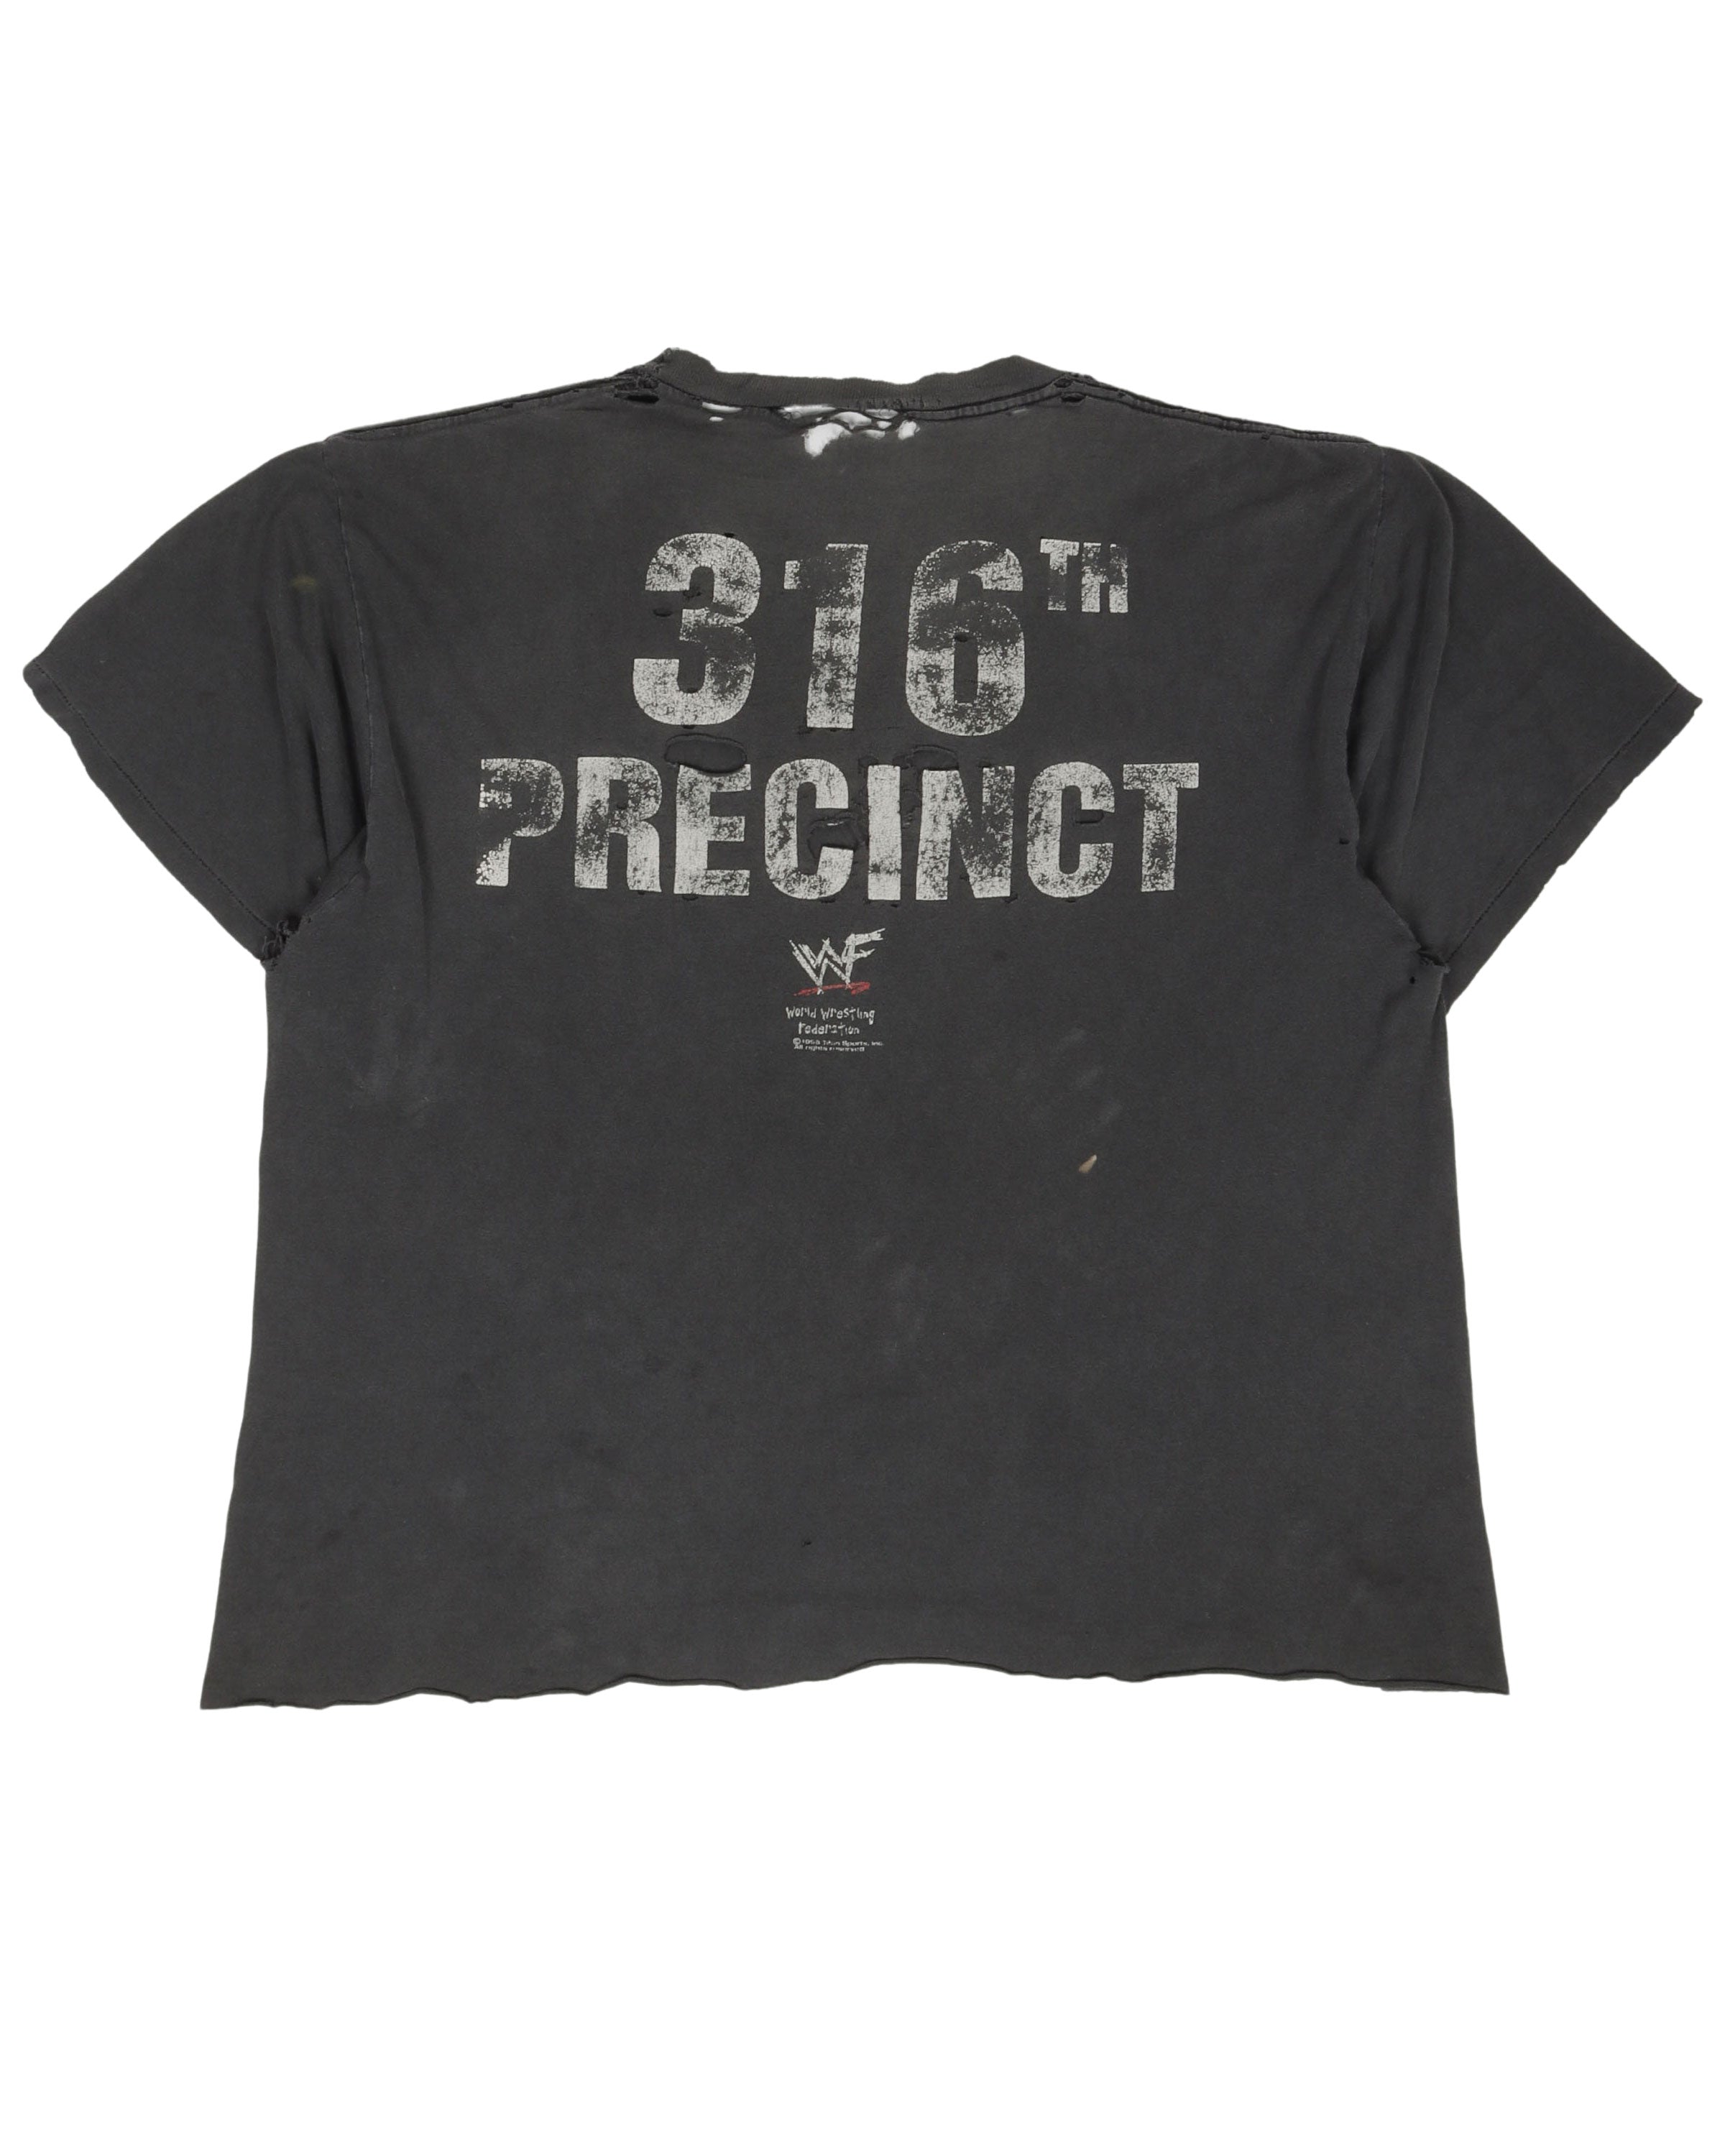 WWF Stone Cold 316 Precinct T-Shirt